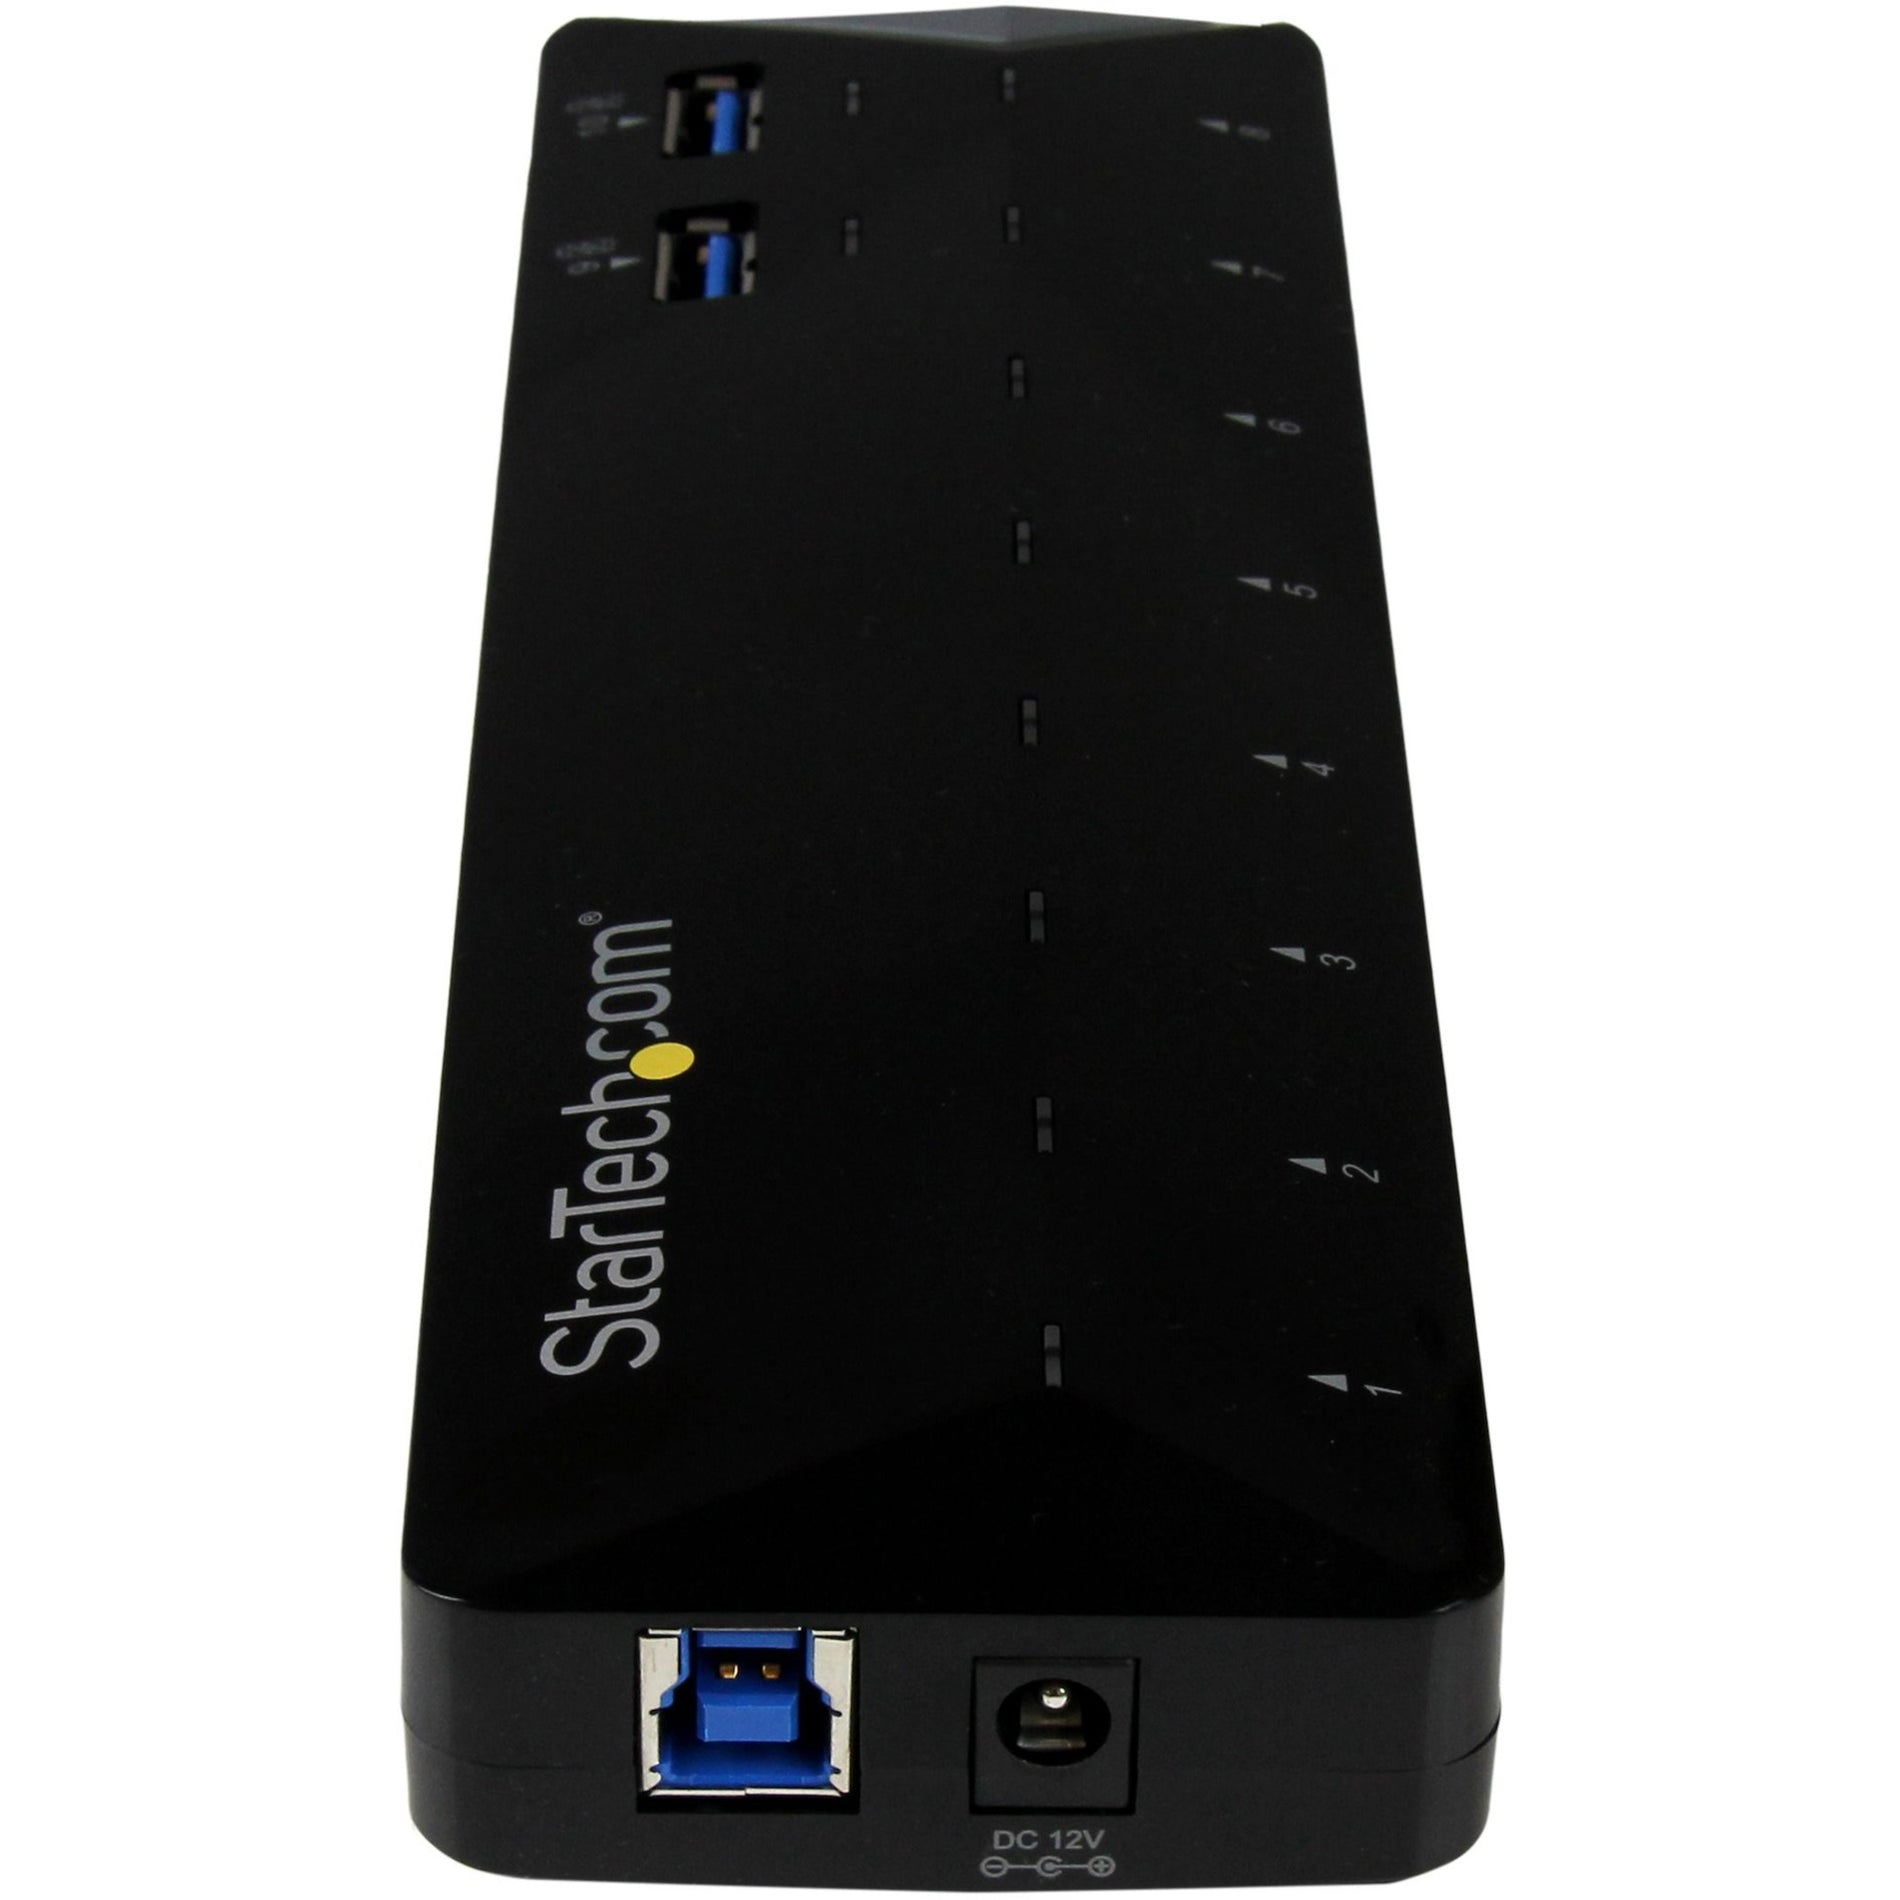 StarTech.com ST103008U2C 10-Port USB 3.0 Hub with Charge and Sync Ports Fast-Charging Station Black  StarTech.com ST103008U2C Hub USB 3.0 a 10 porte con porte di ricarica e sincronizzazione stazione di ricarica rapida nera